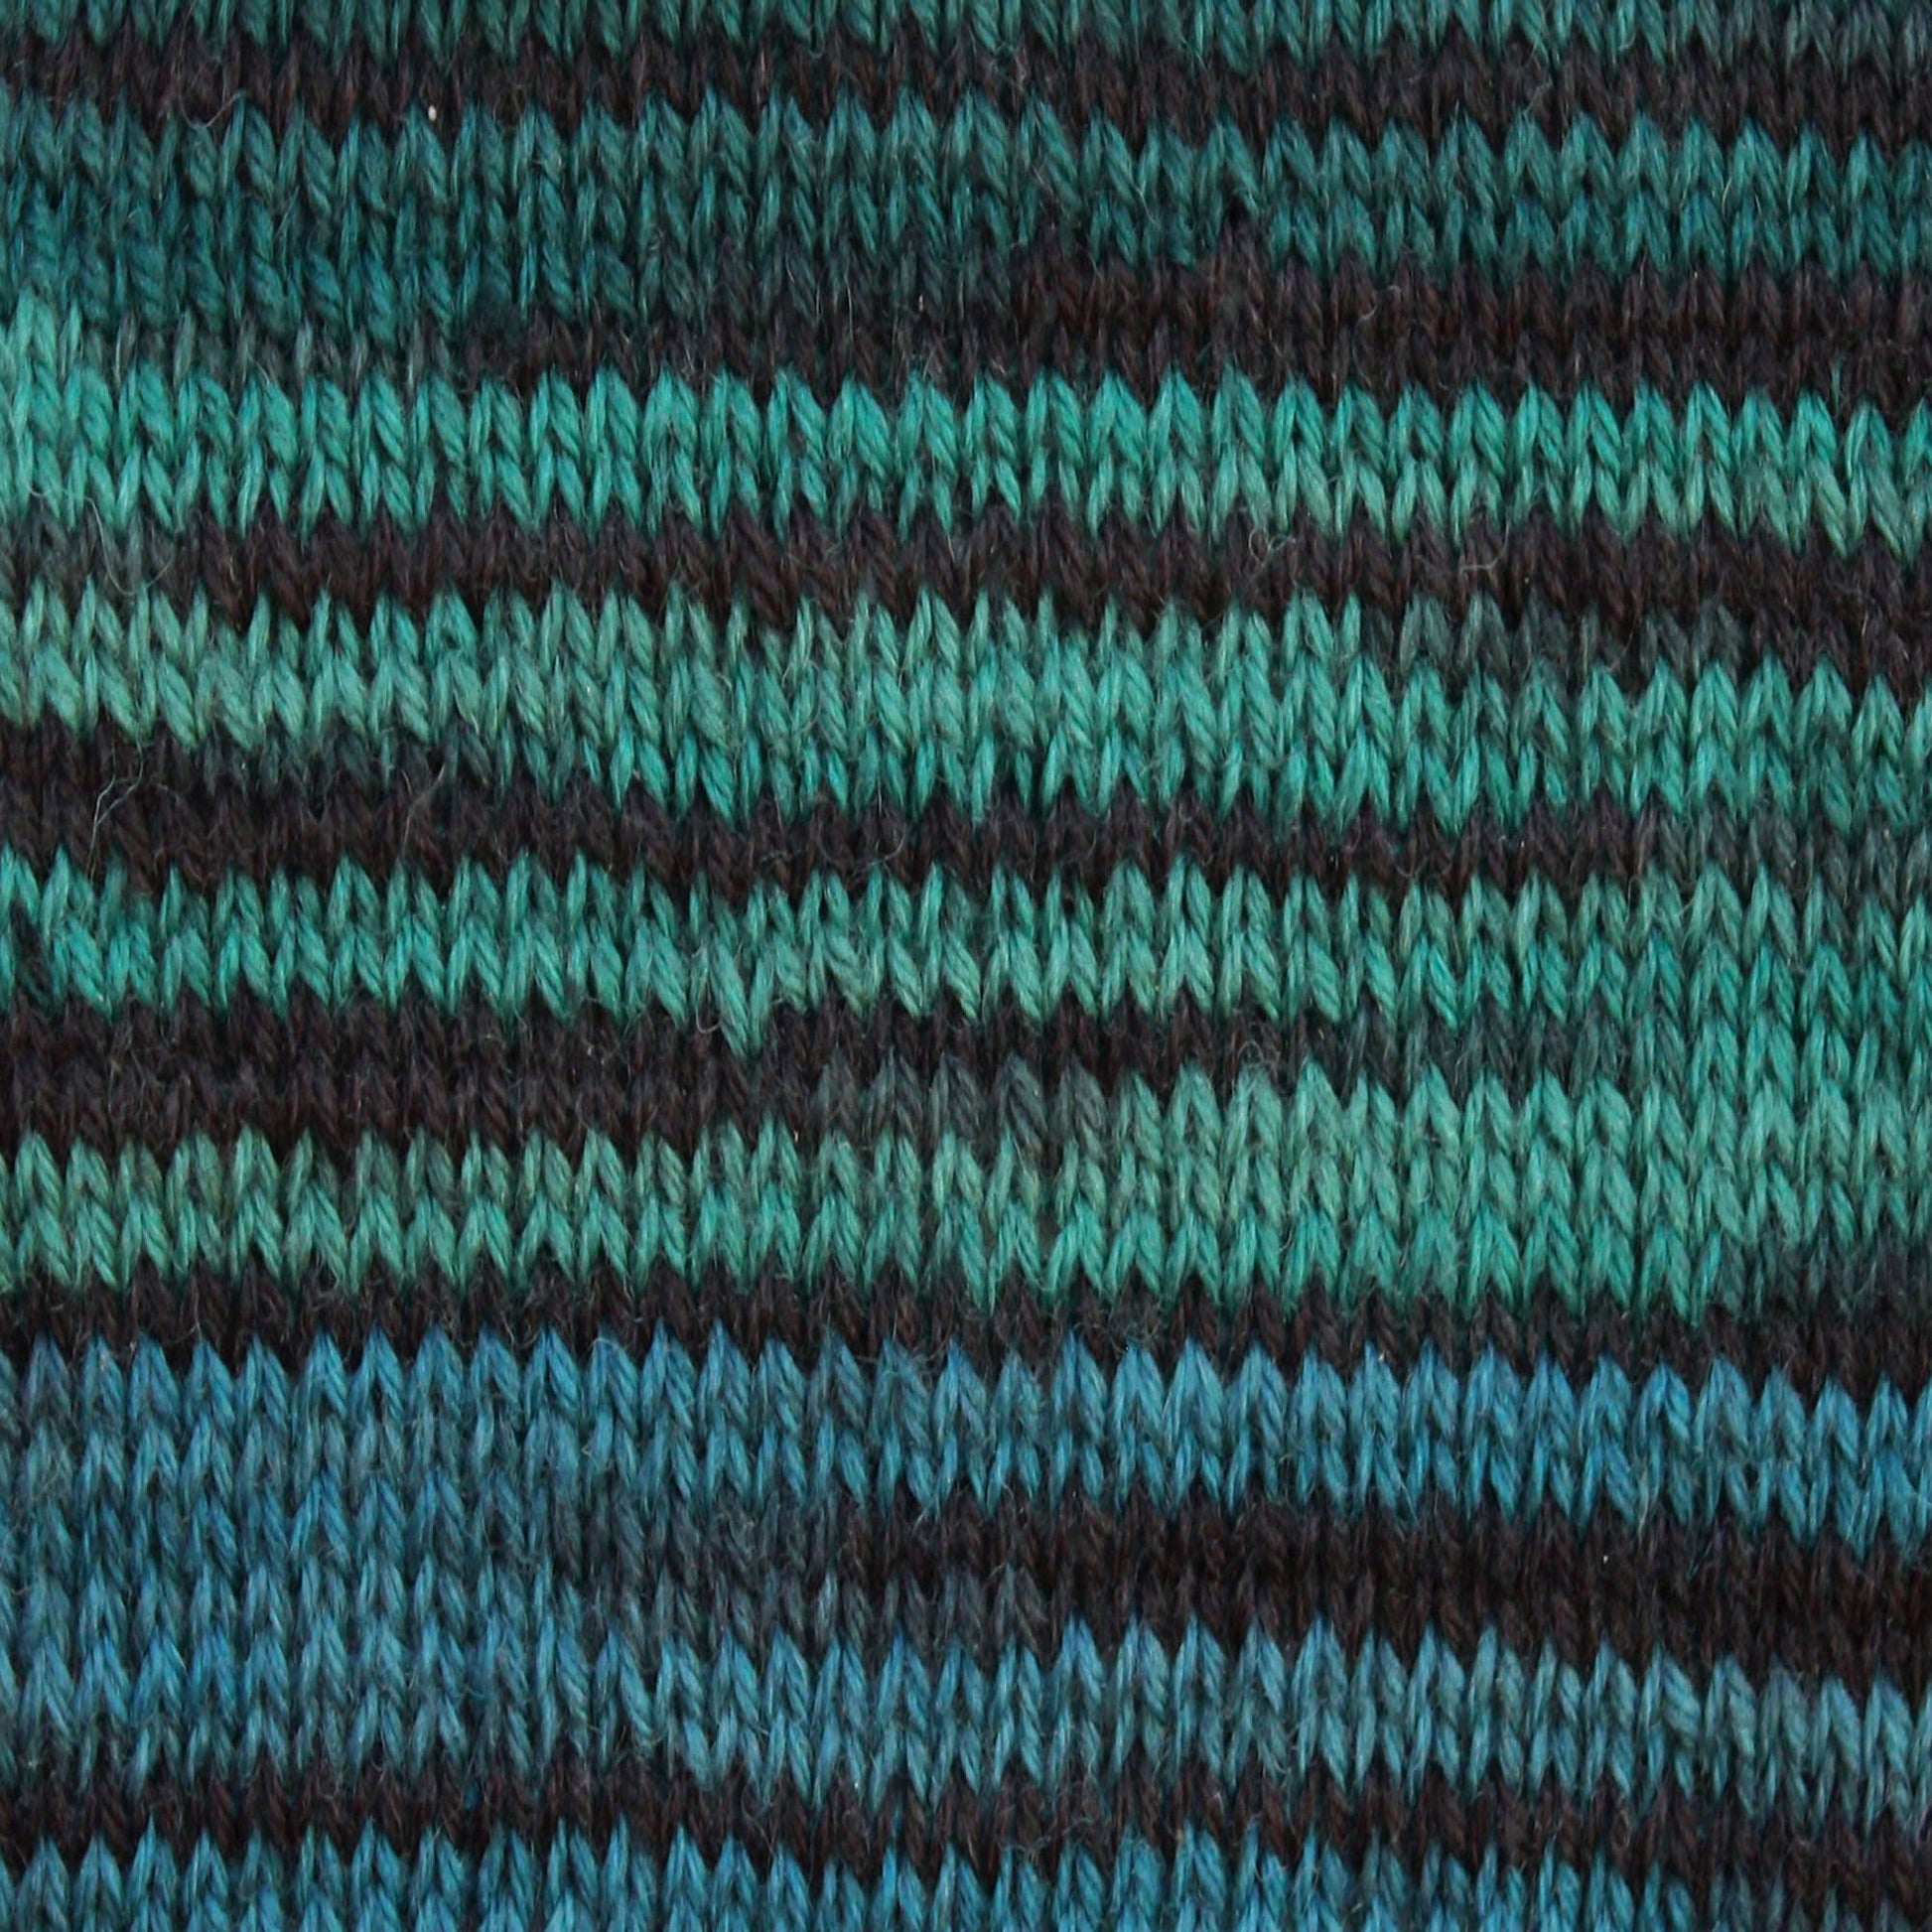 Patons Kroy Socks Yarn Turquoise Stripes